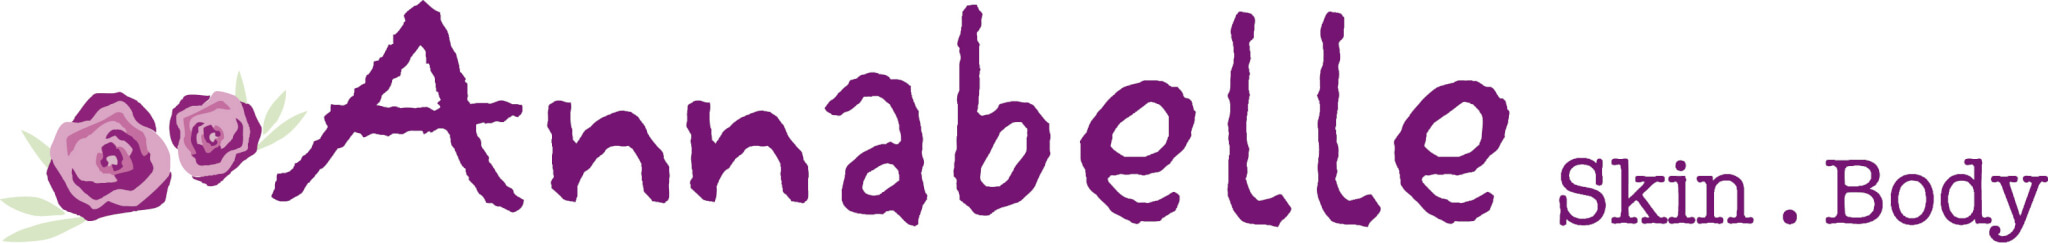 annabelle logo2010